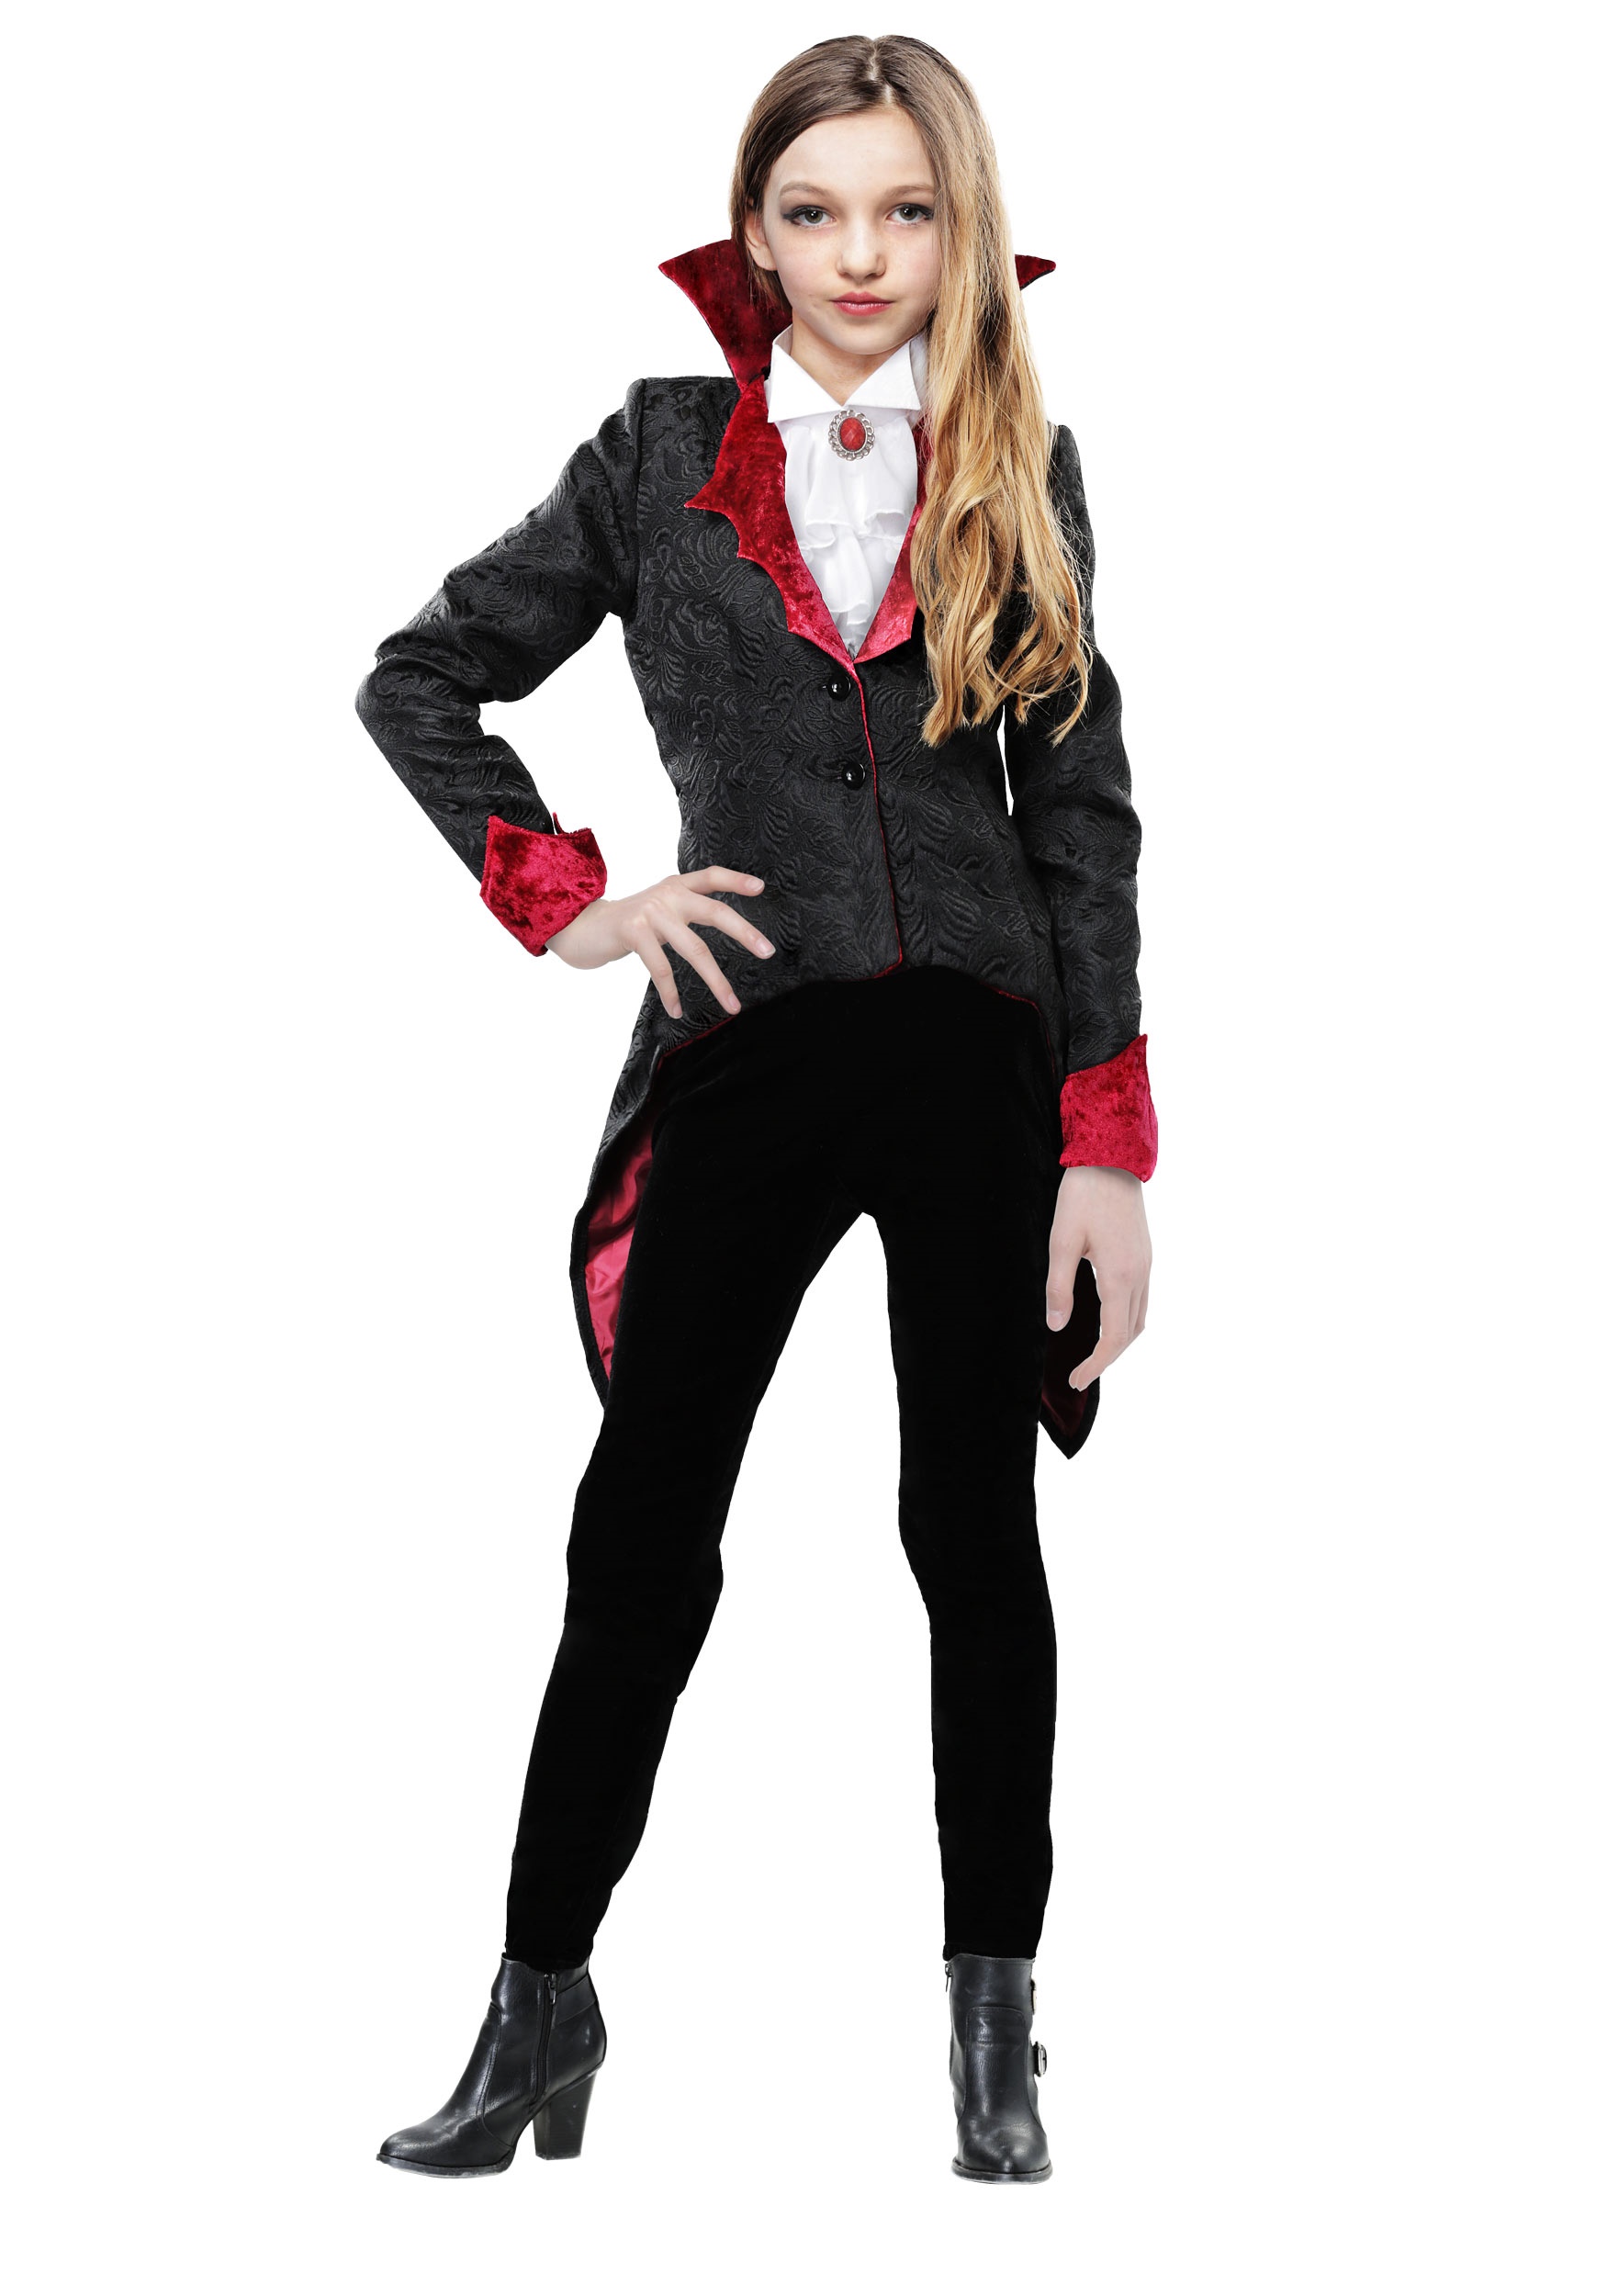 Photos - Fancy Dress FUN Costumes Dashing Vampiress Girl's Costume Black/Red/White FUN3